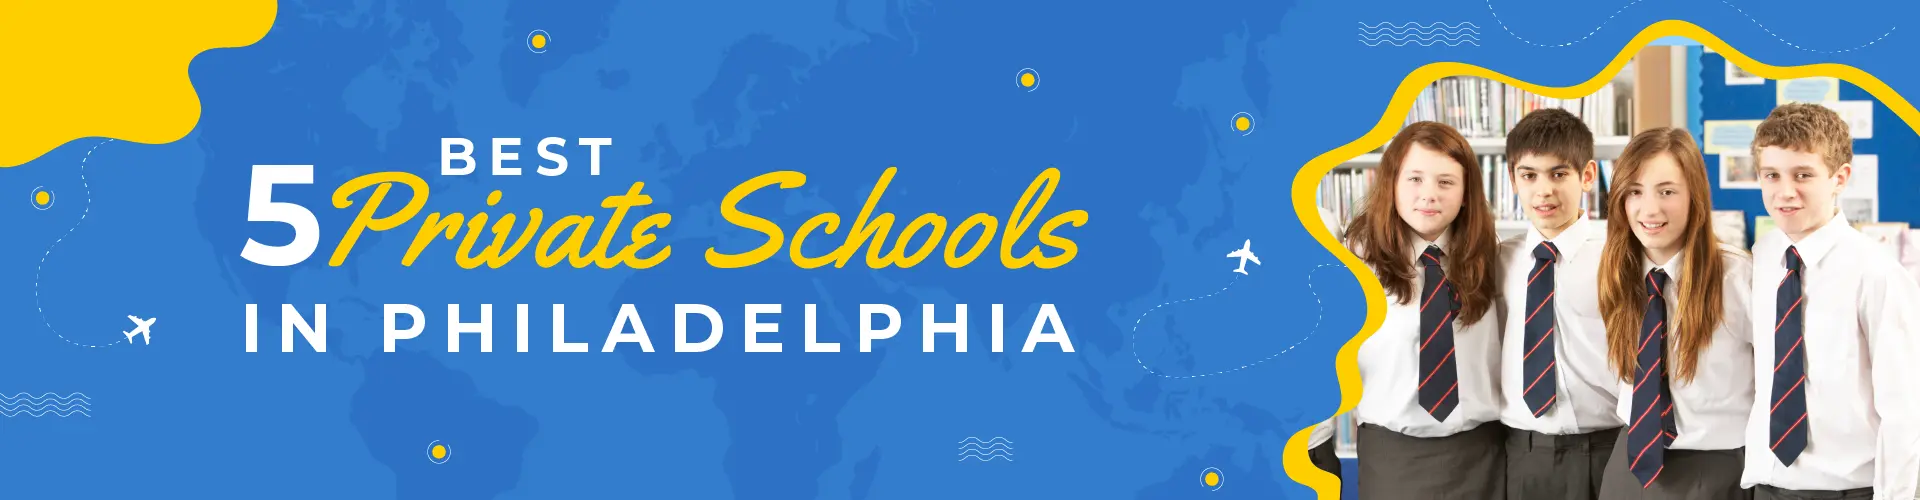 private schools in philadelphia